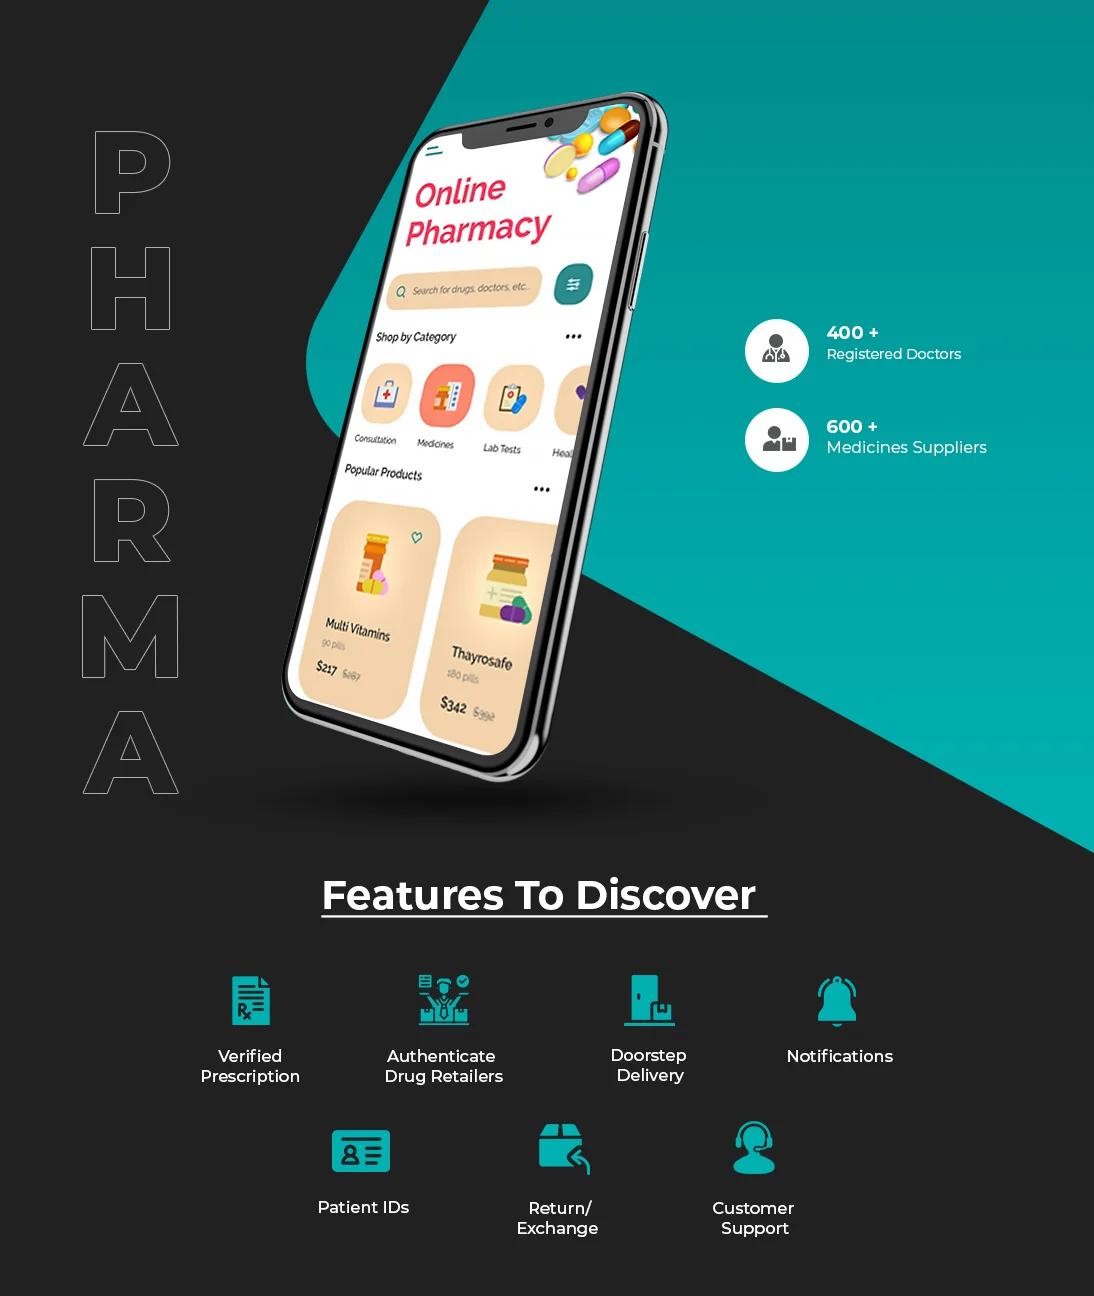 Pharma Aid App